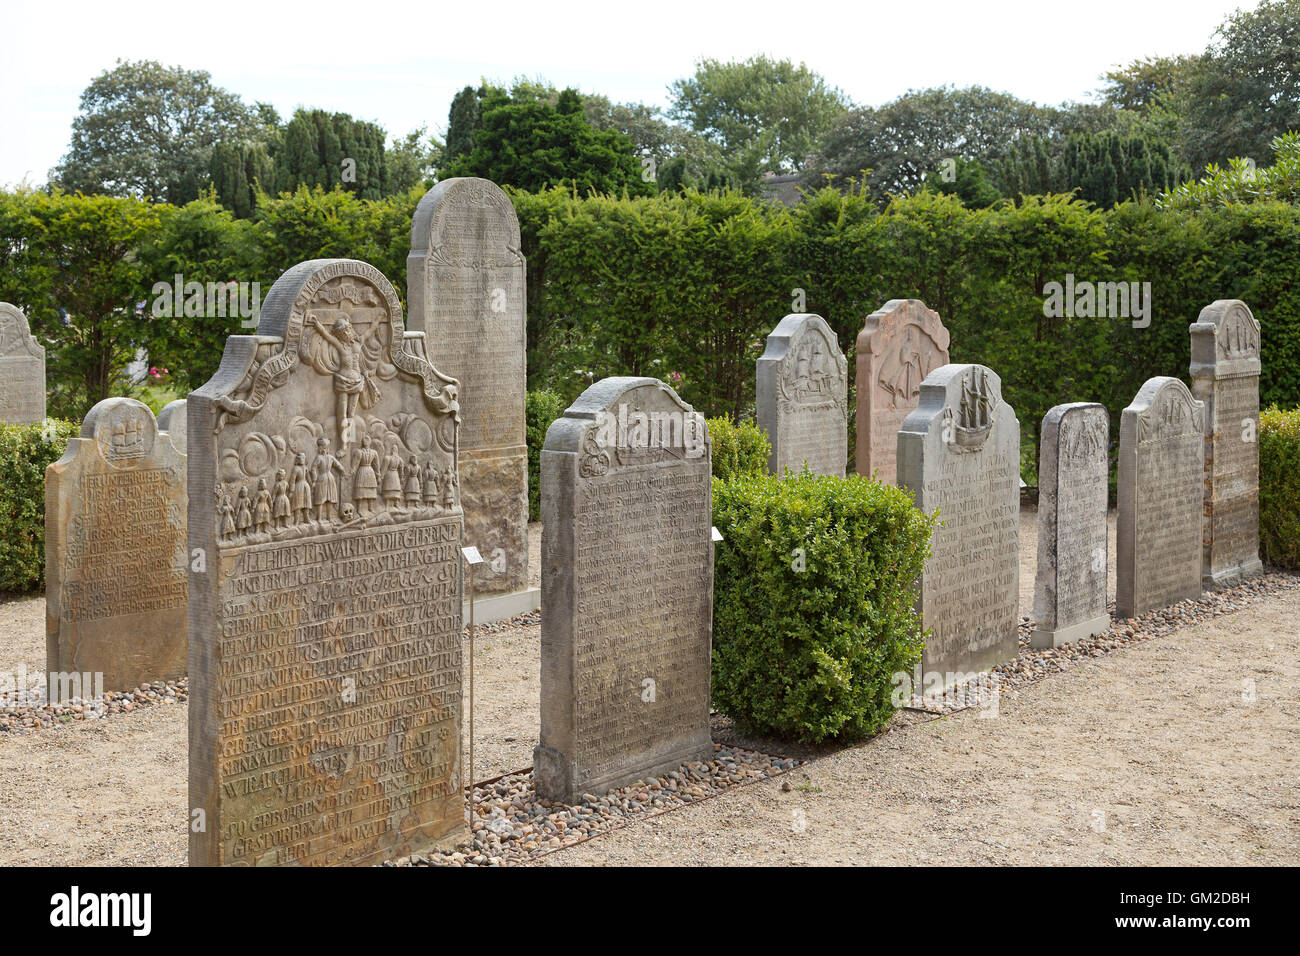 old gravestones, Nebel, Amrum Island, North Friesland, Schleswig-Holstein, Germany Stock Photo